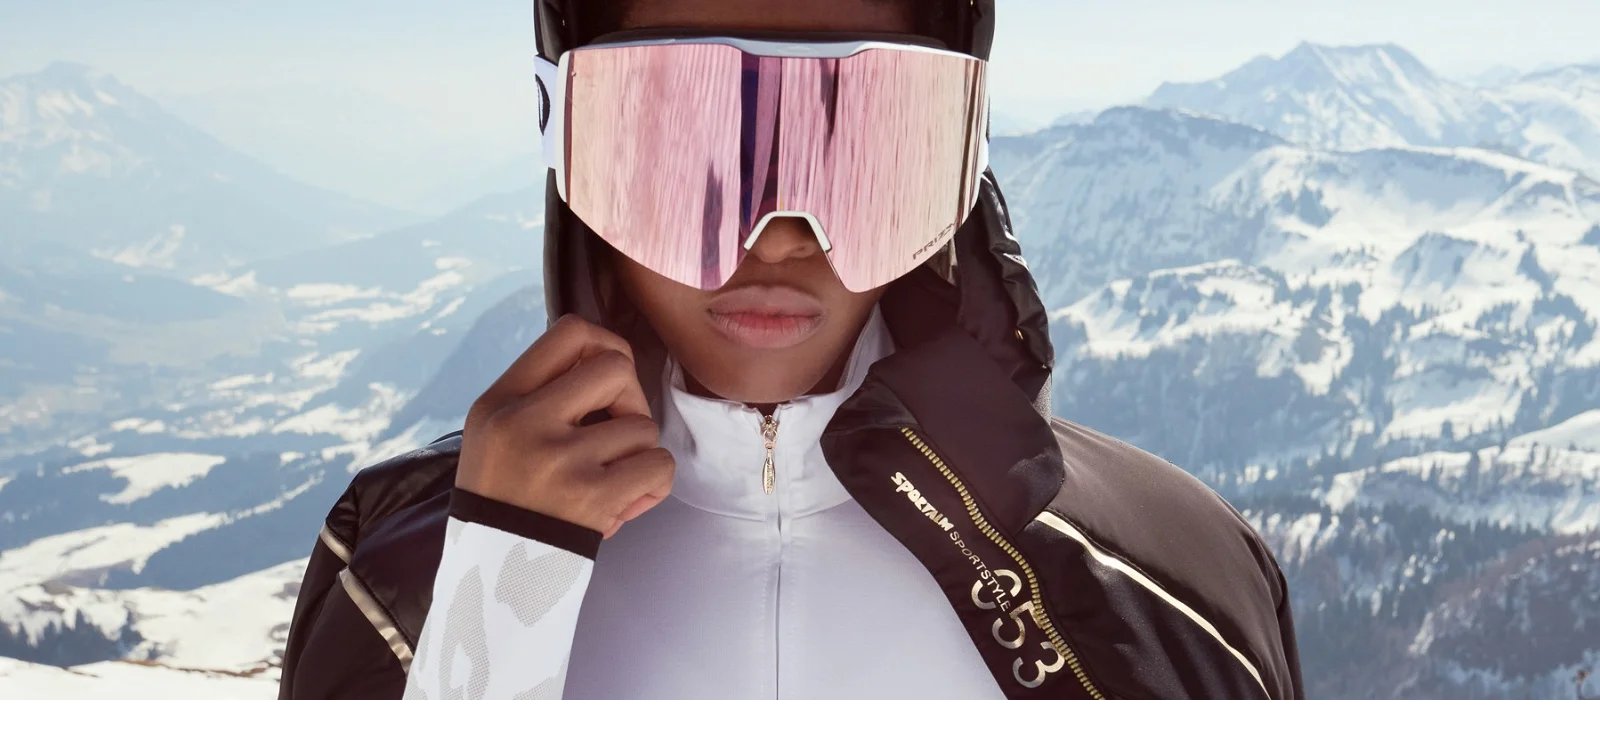 Dames Ski Kleding | Damplein 9 SKI & Fashion